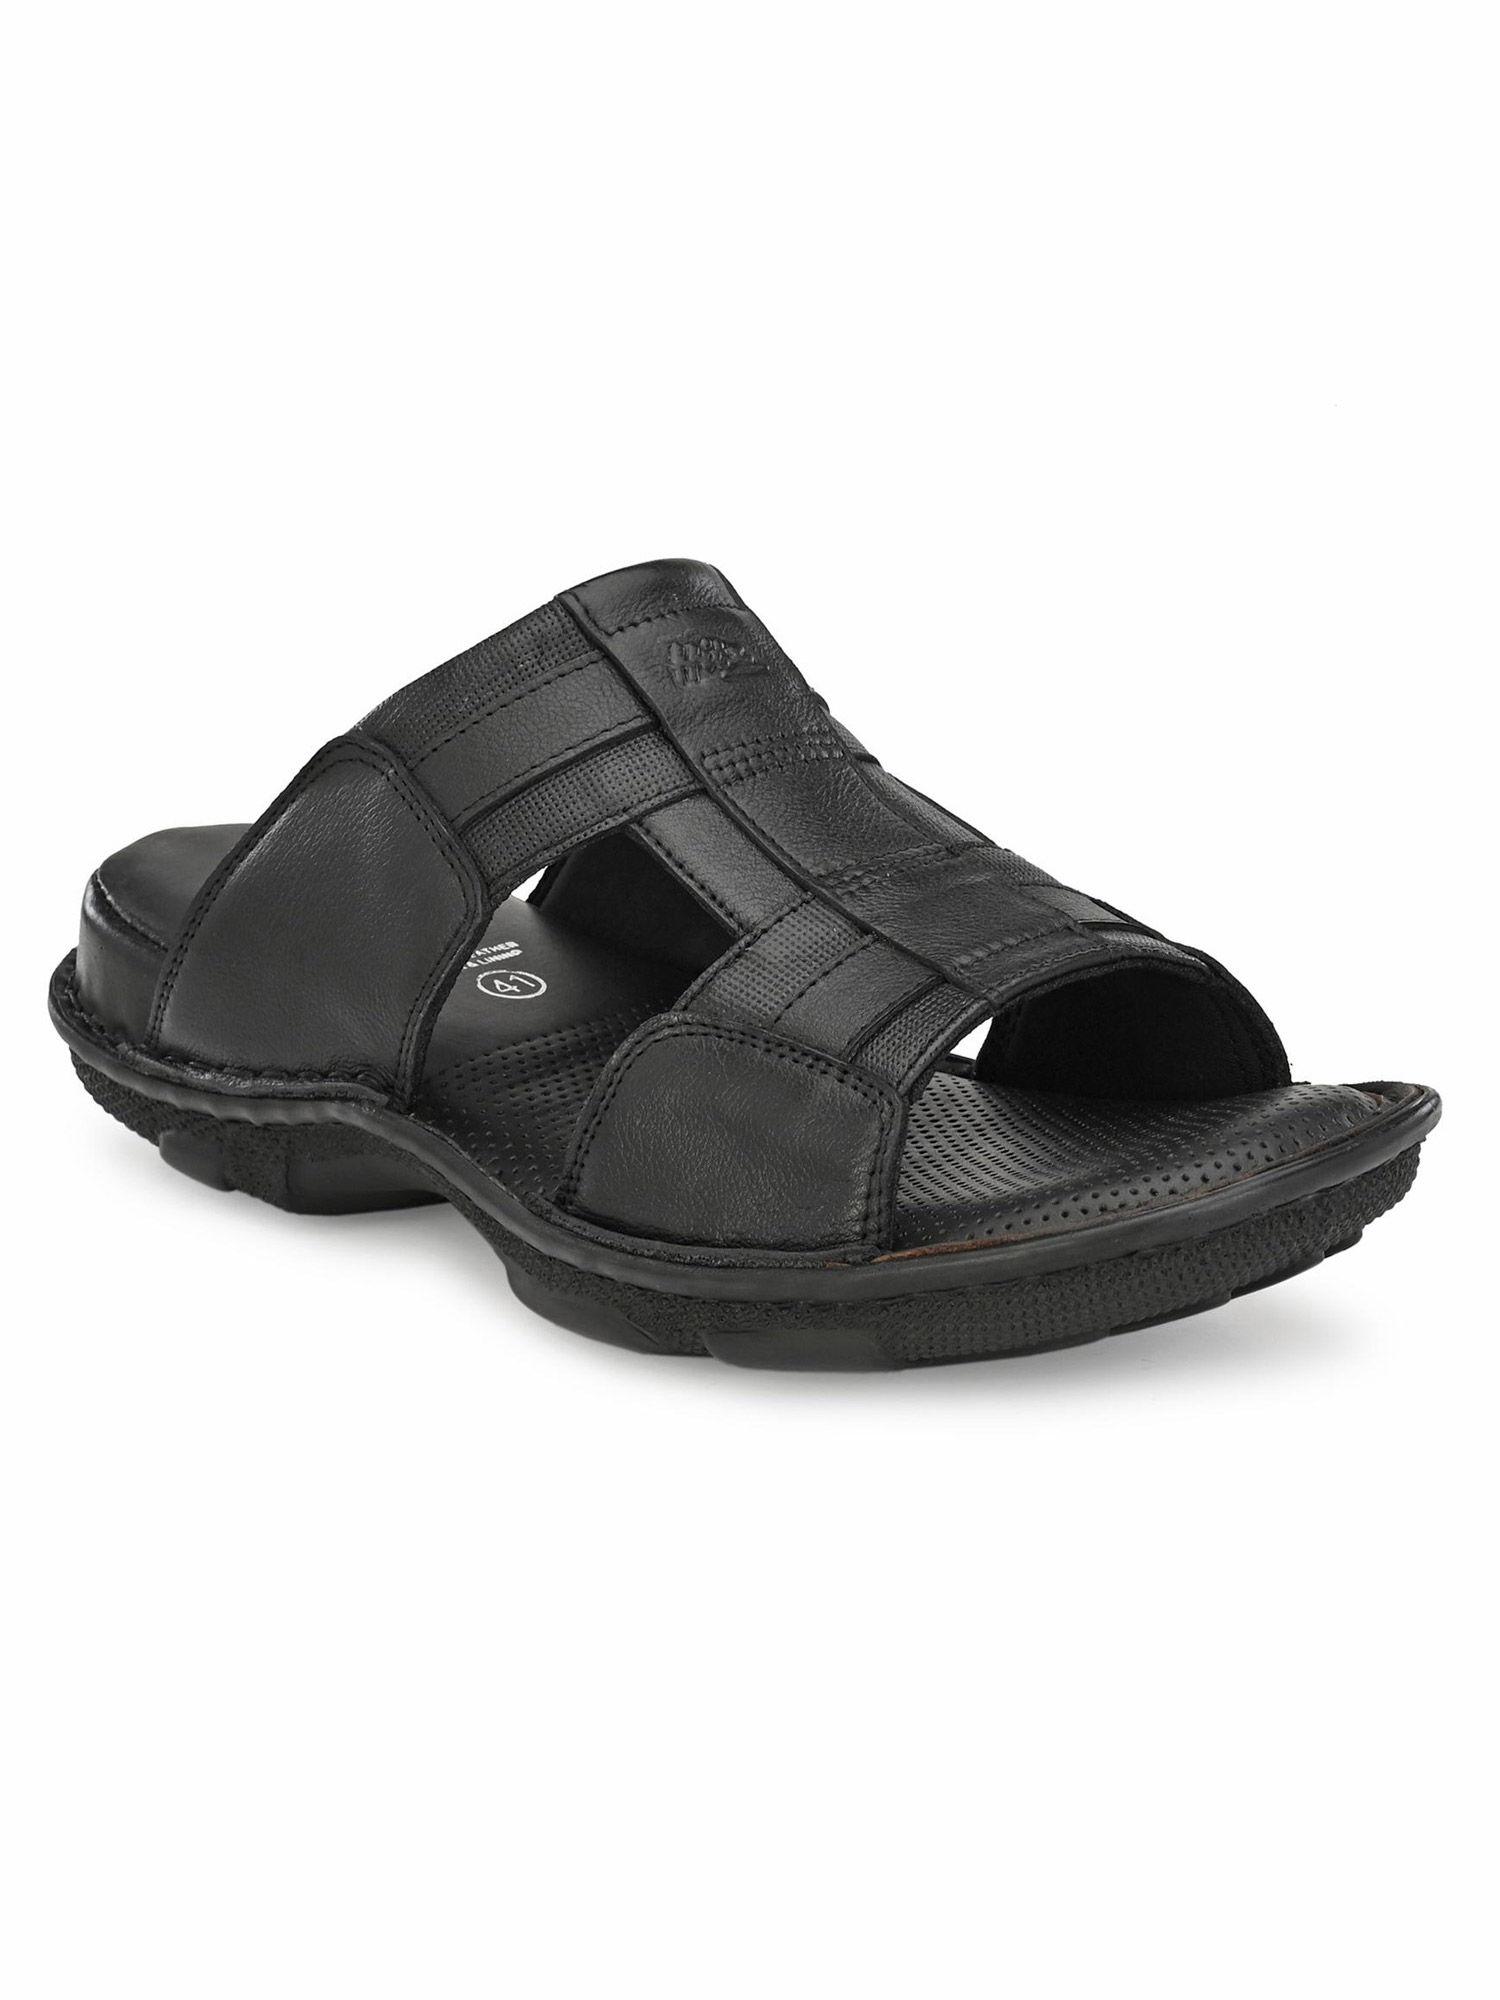 men's black leather open toe comfort slippers